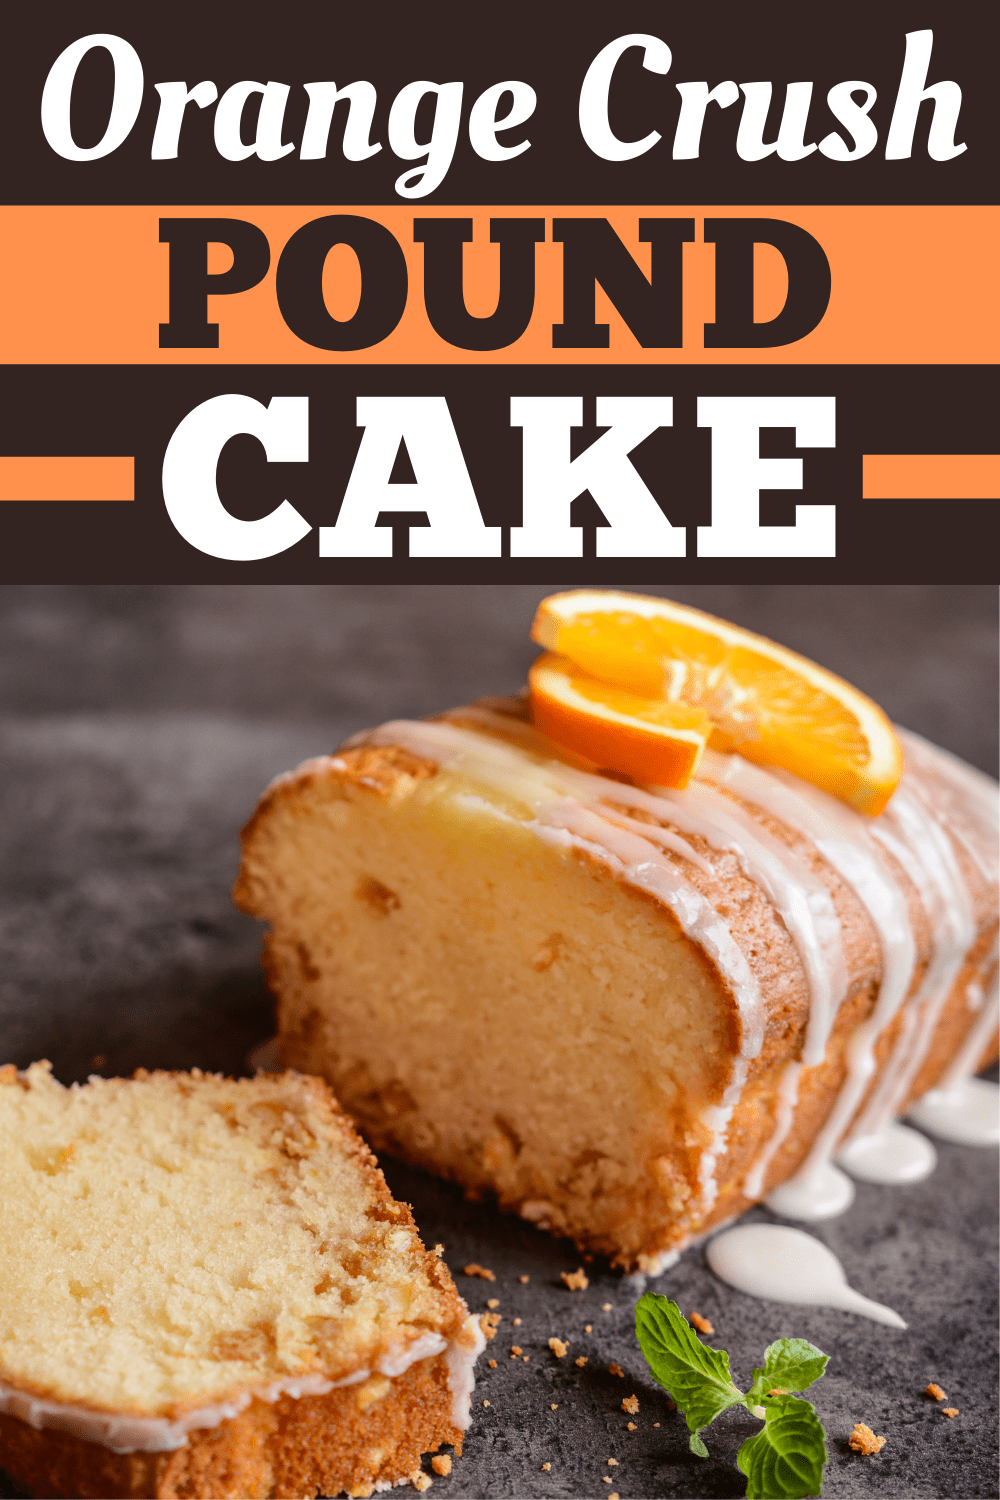 Sliced Orange Crush Pound Cake, Drizzled With White Sugar and Orange Slice